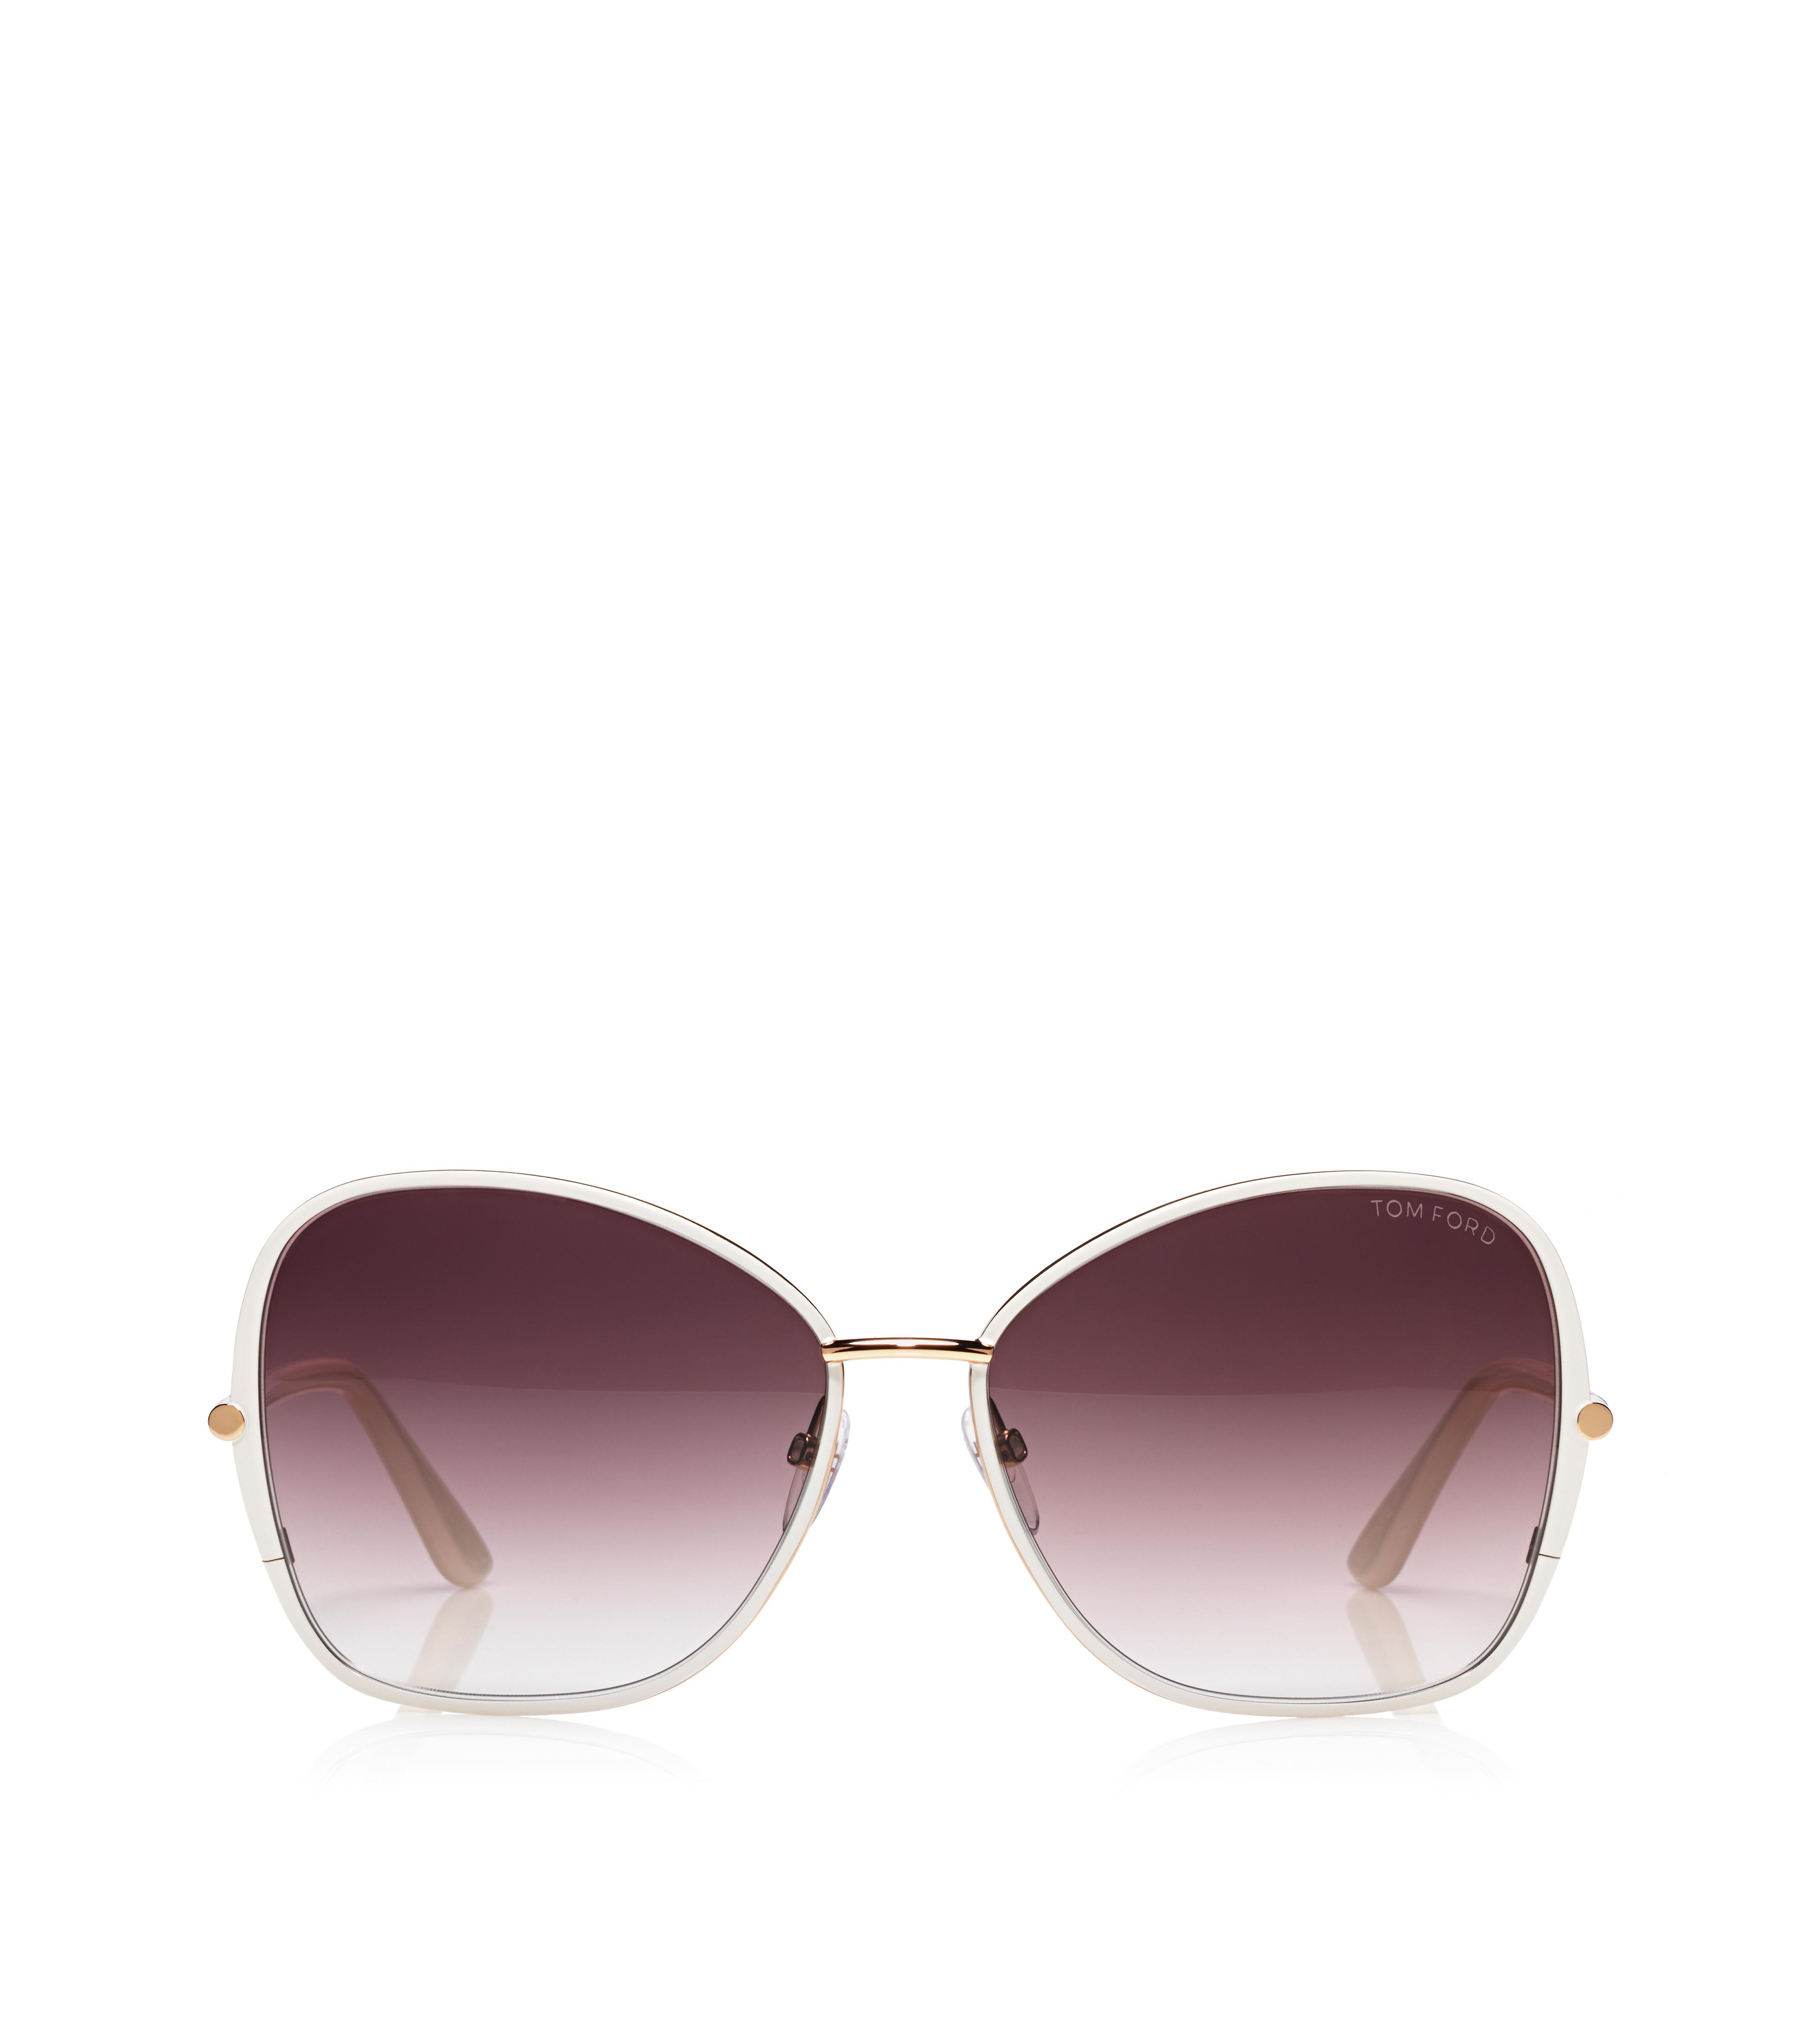 Solange Vintage Soft Square Sunglasses - Tom Ford